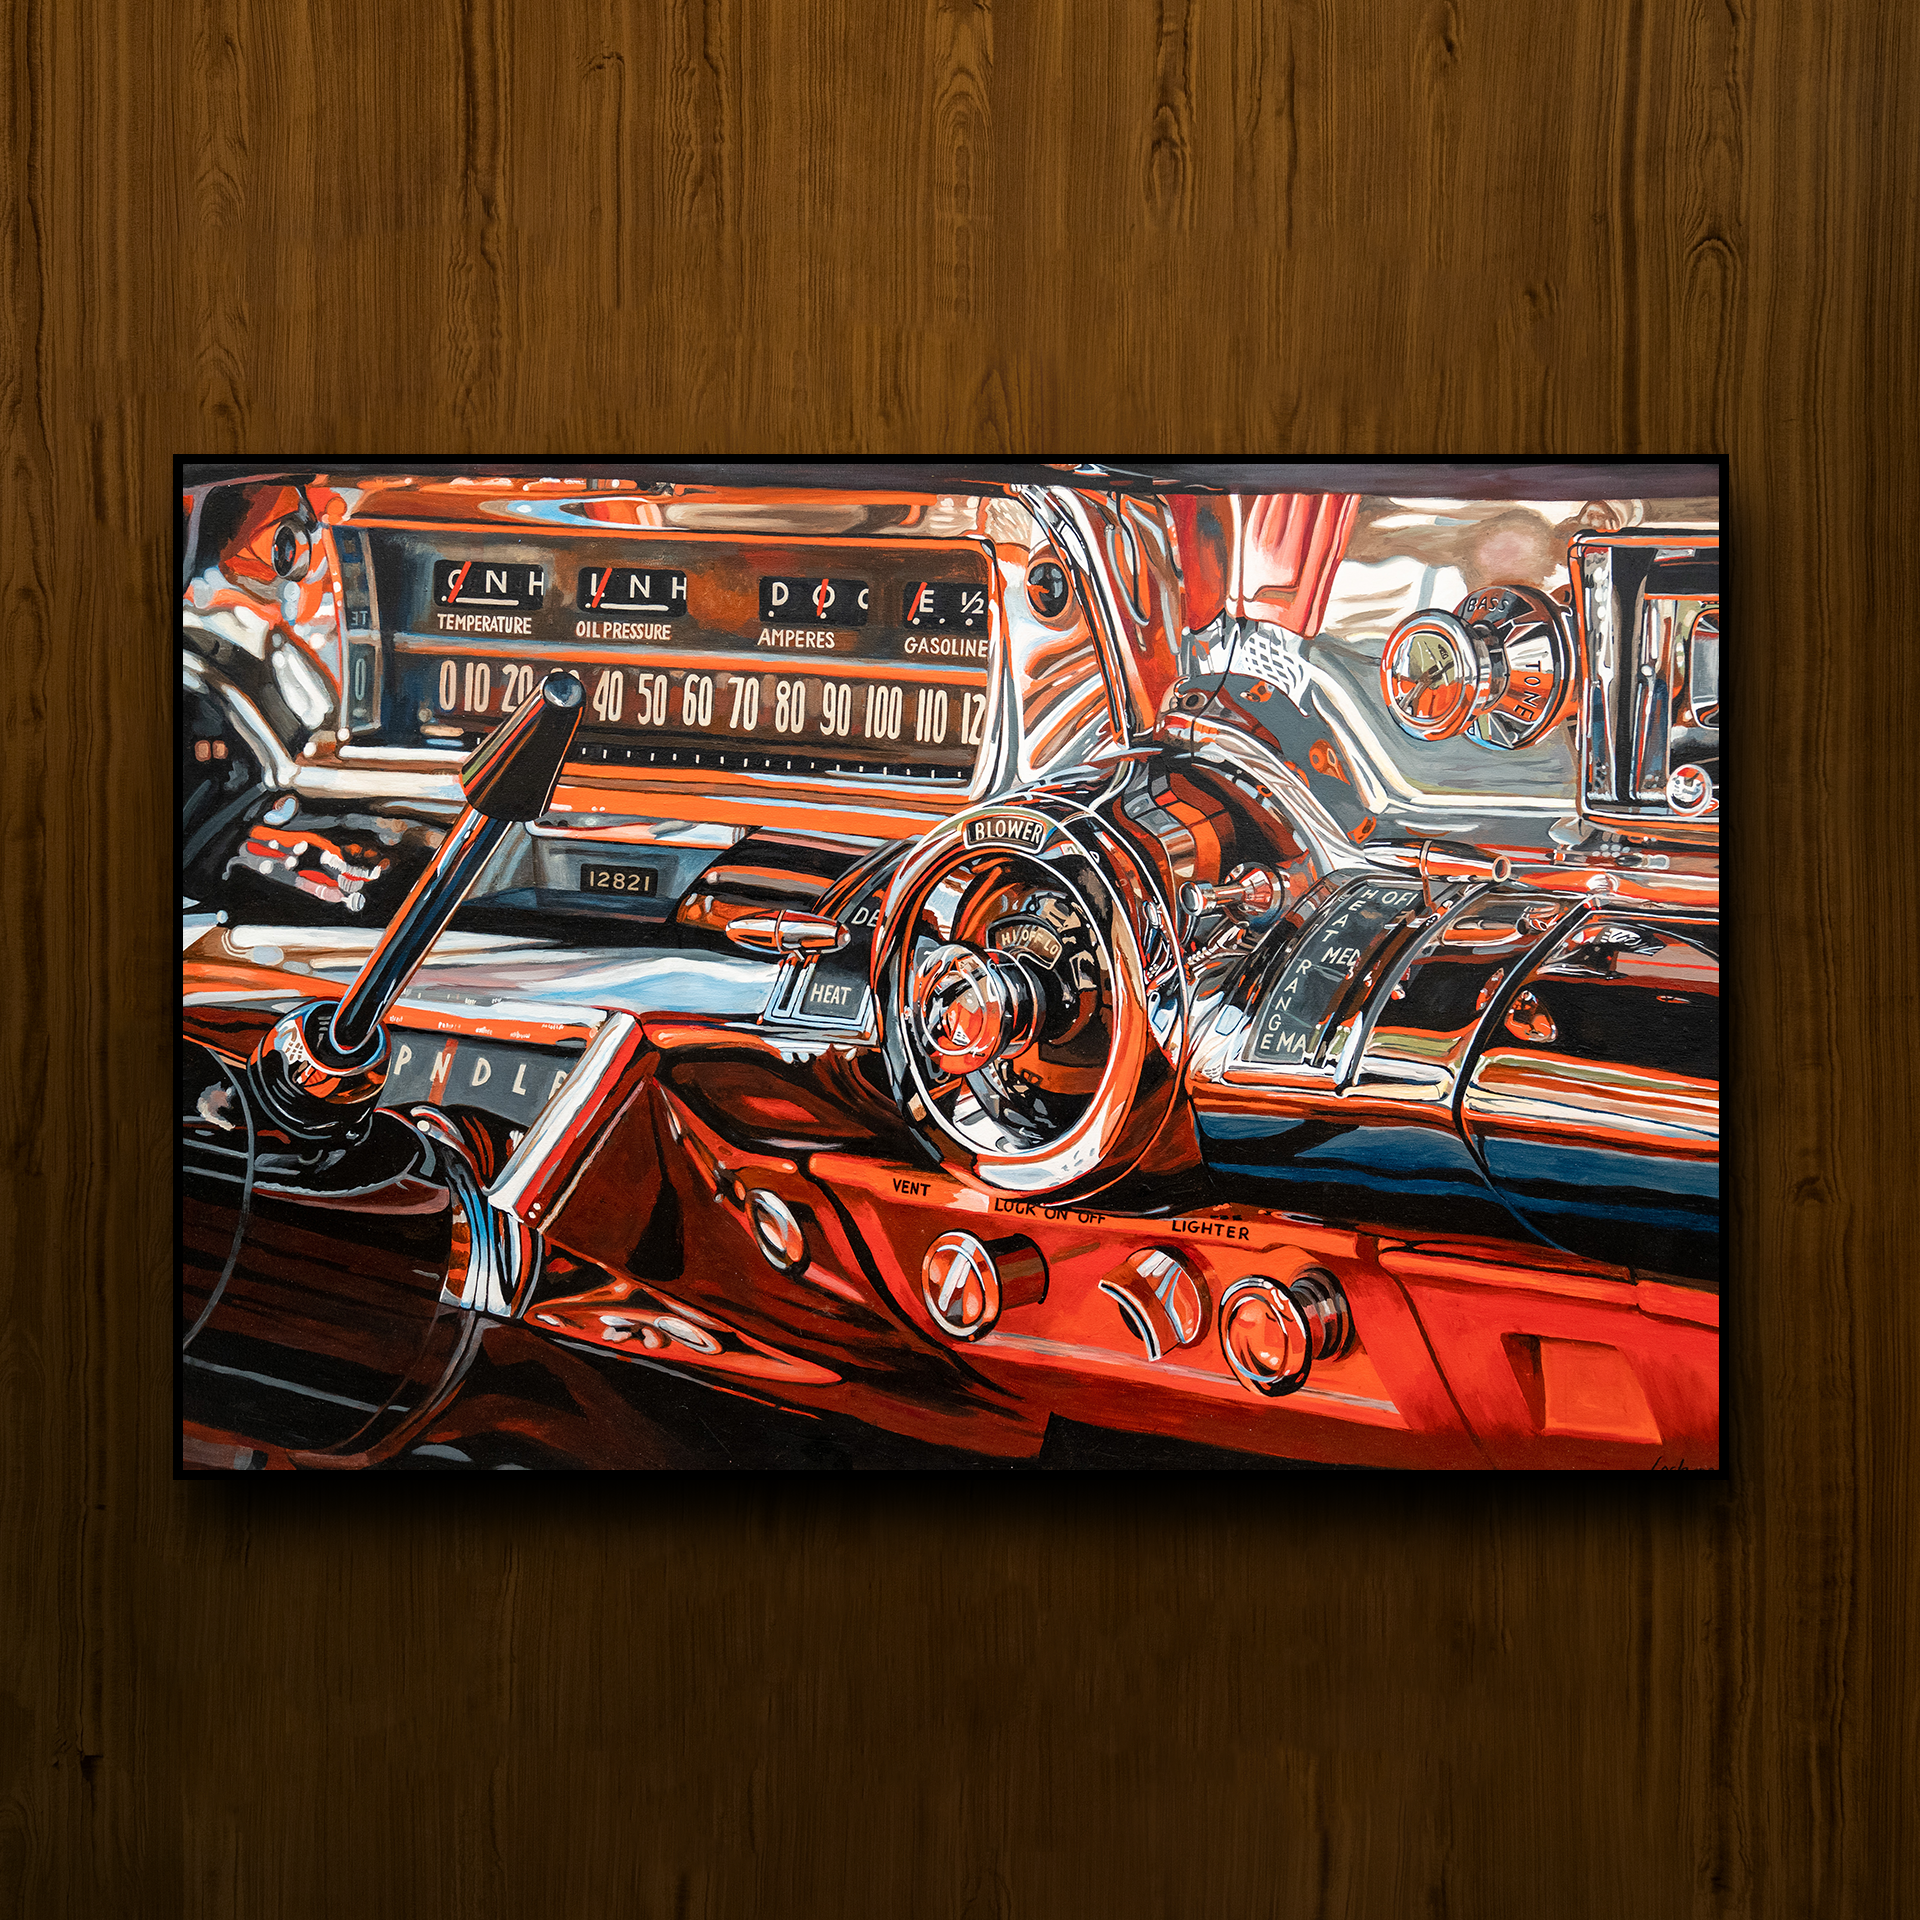 Lory Lockwood (b. 1949), 1957 Buick Roadmaster Dash, 2021, Acrylic on Canvas, 8' x 4'